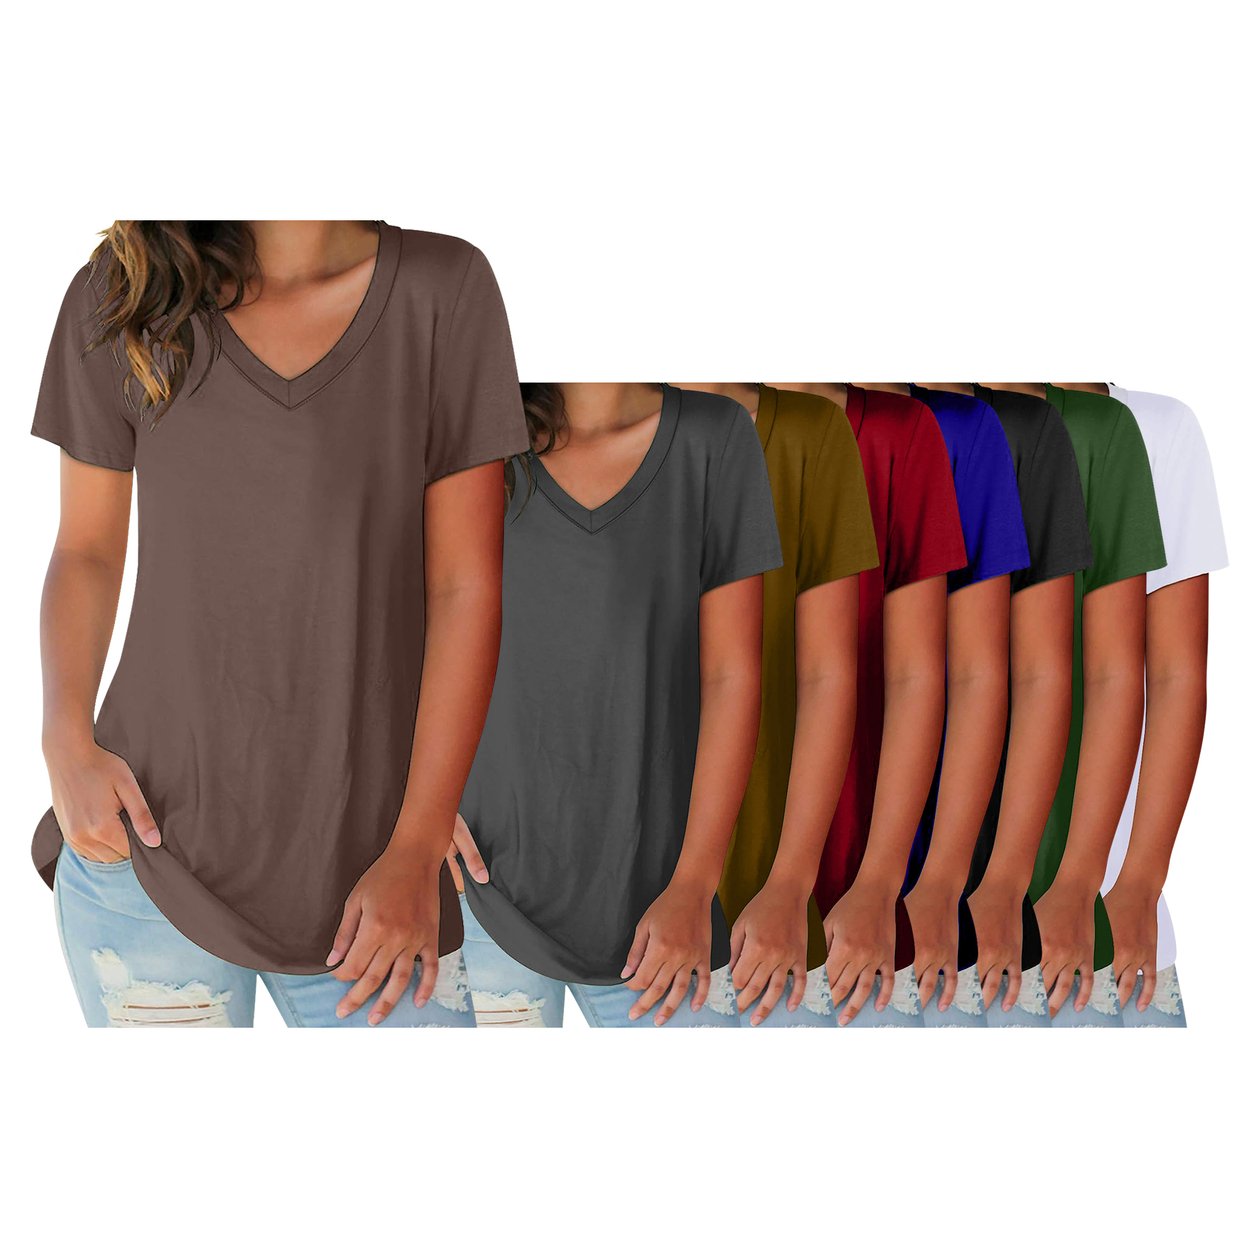 3-Pack: Women's Ultra Soft Smooth Cotton Blend Basic V-Neck Short Sleeve Shirts - Black, White, Brown, X-large